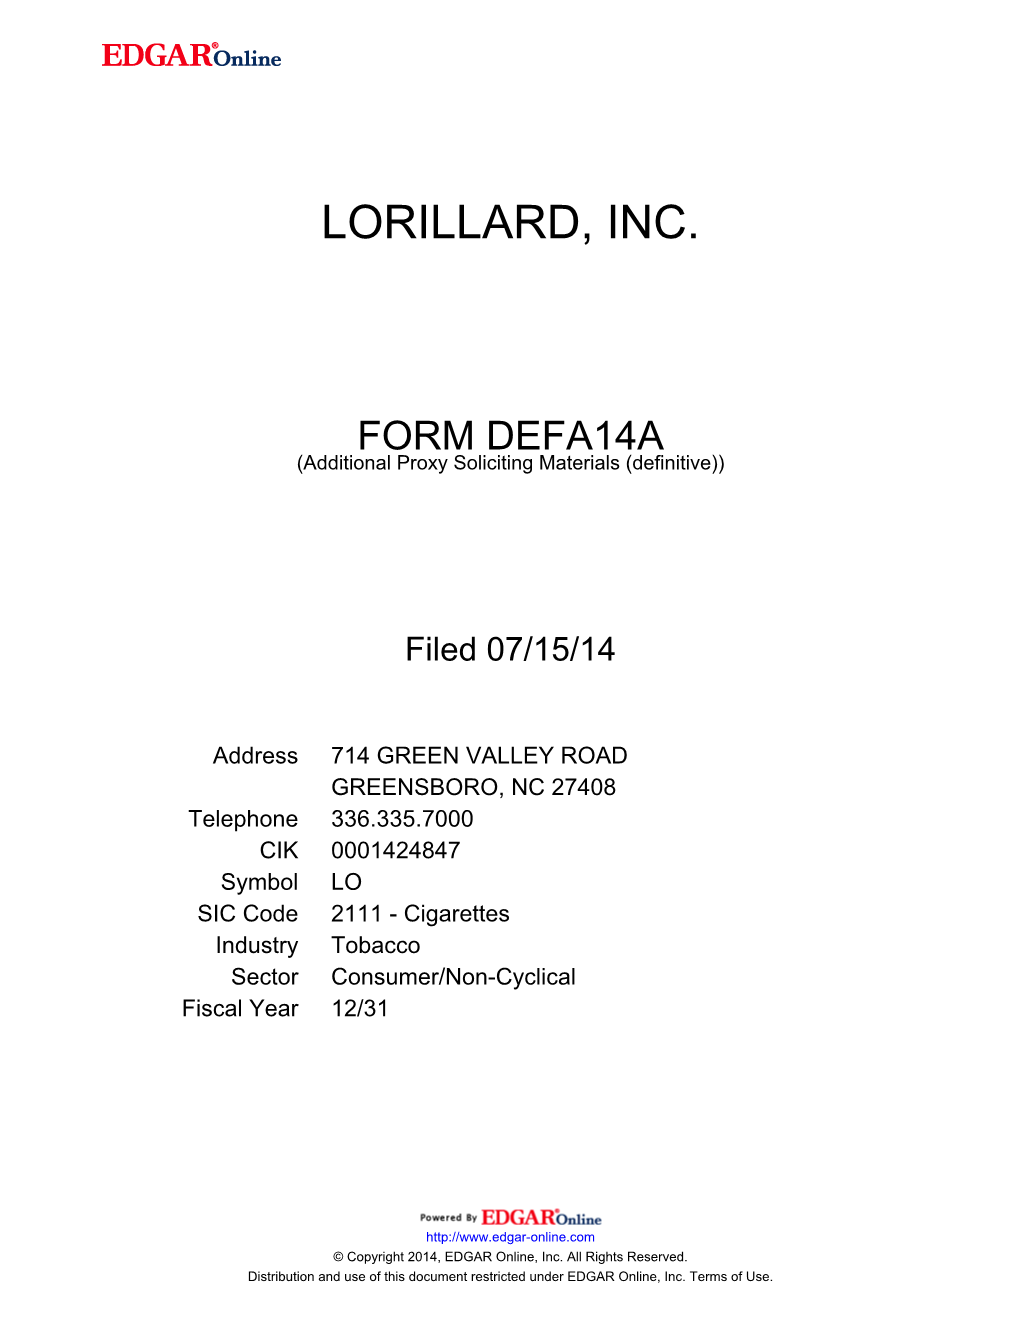 Lorillard, Inc